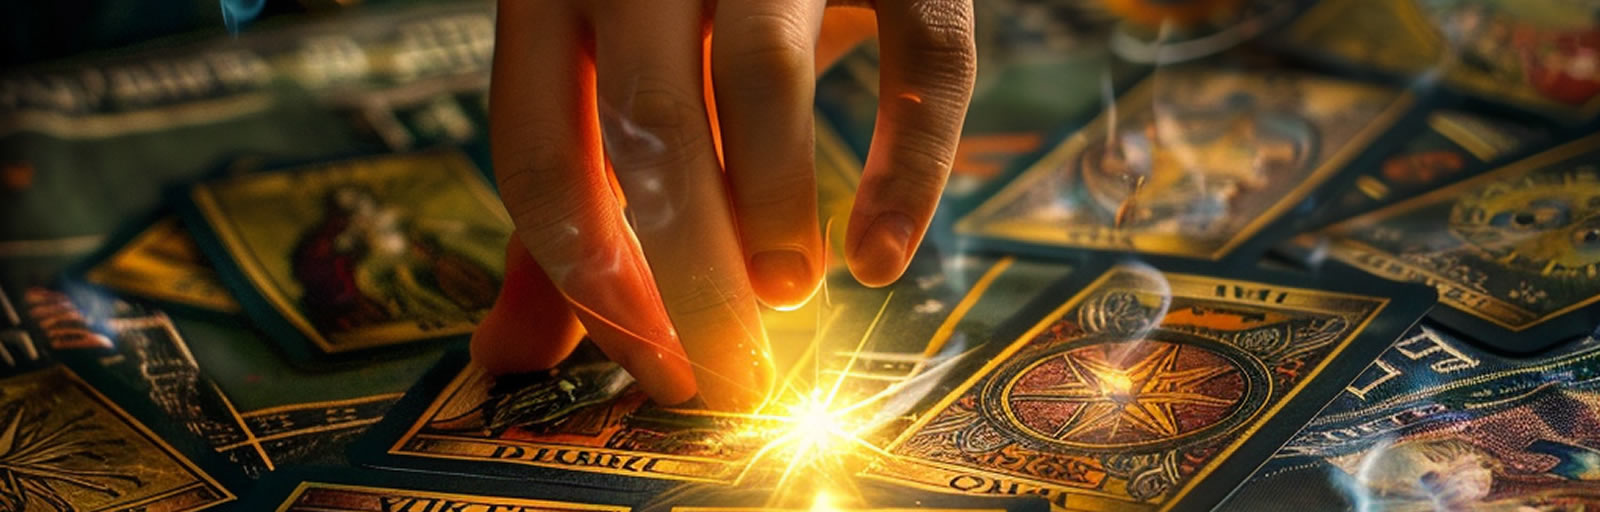 Healing Light, The Power of Tarot Cards as Psychic Tools, Main image